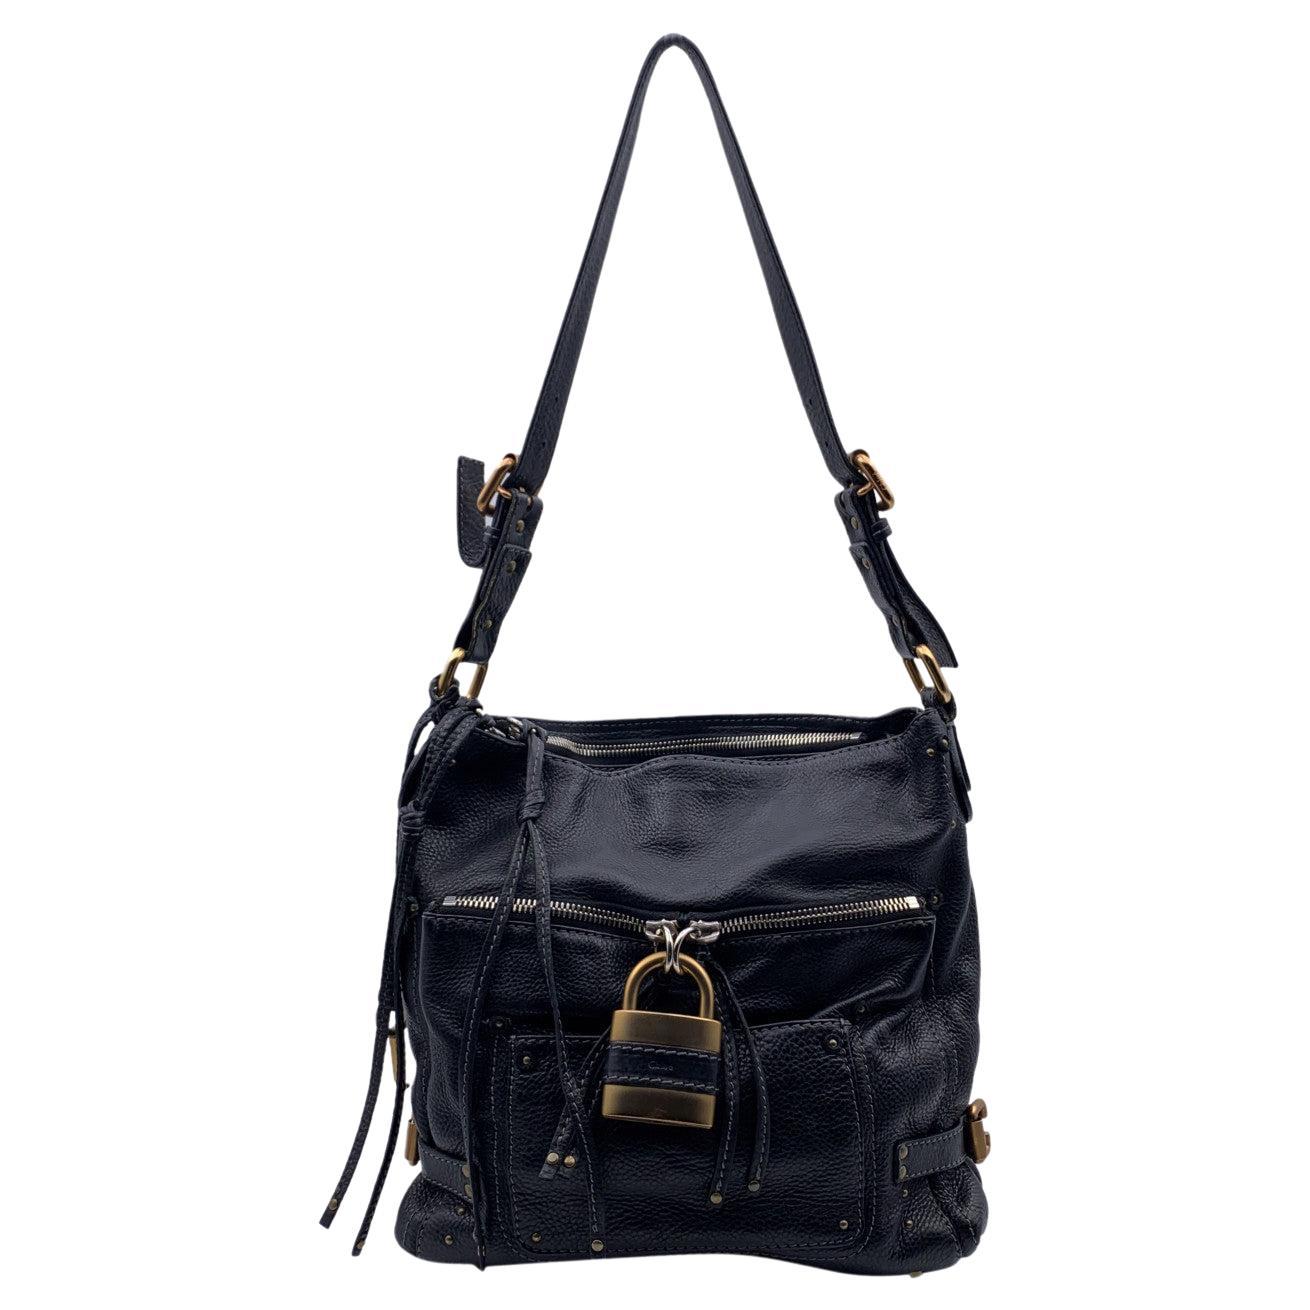 Chloe Black Leather Large Paddington Padlock Shoulder Bag